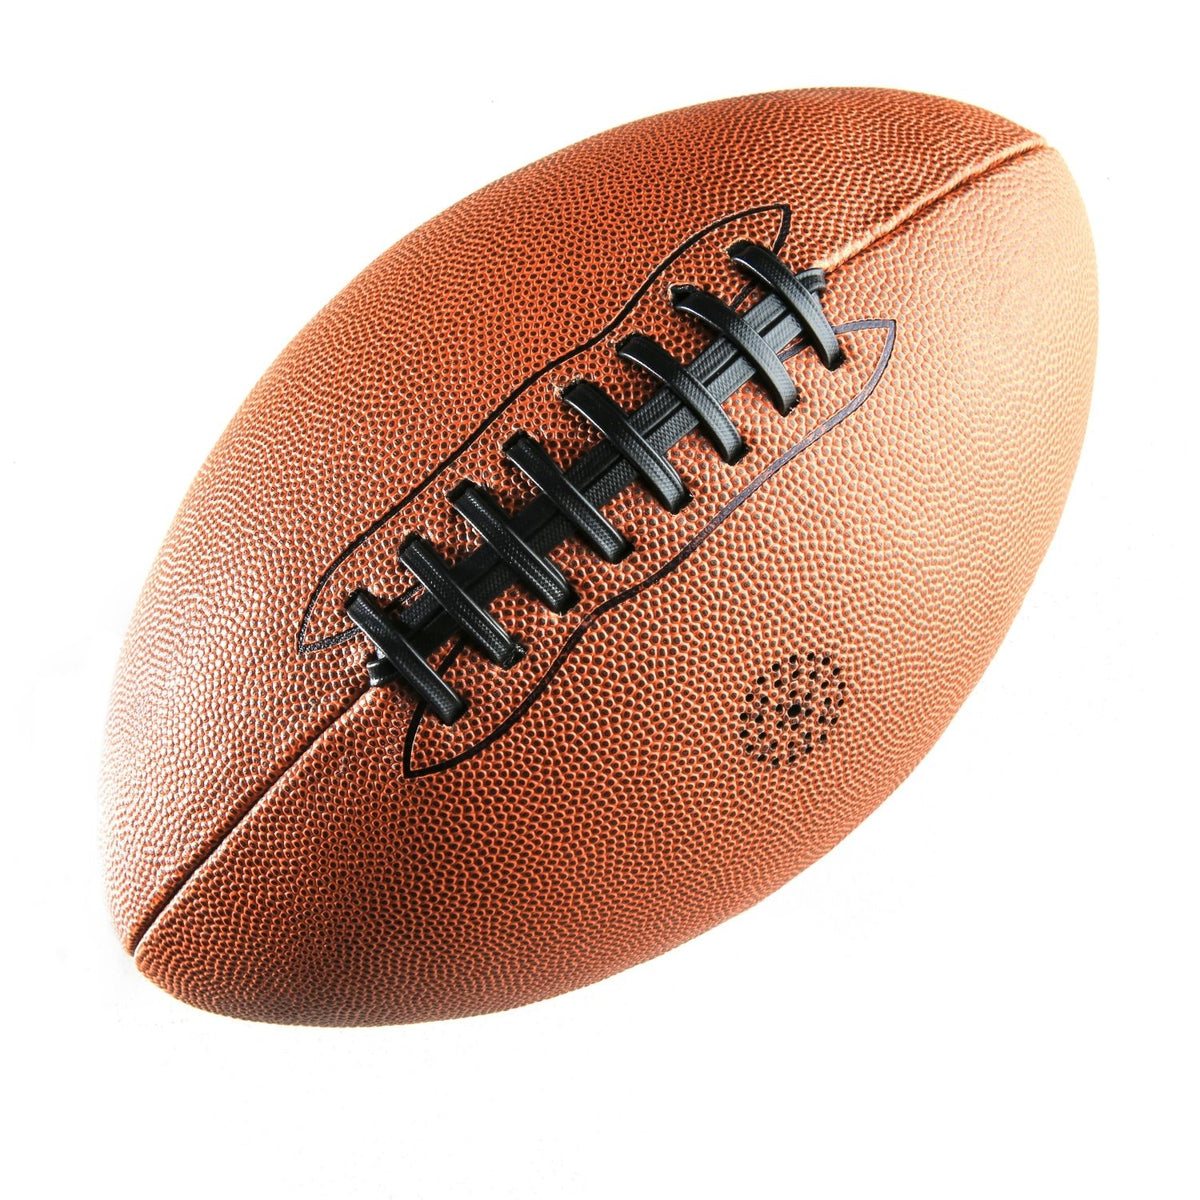 american football ball leather